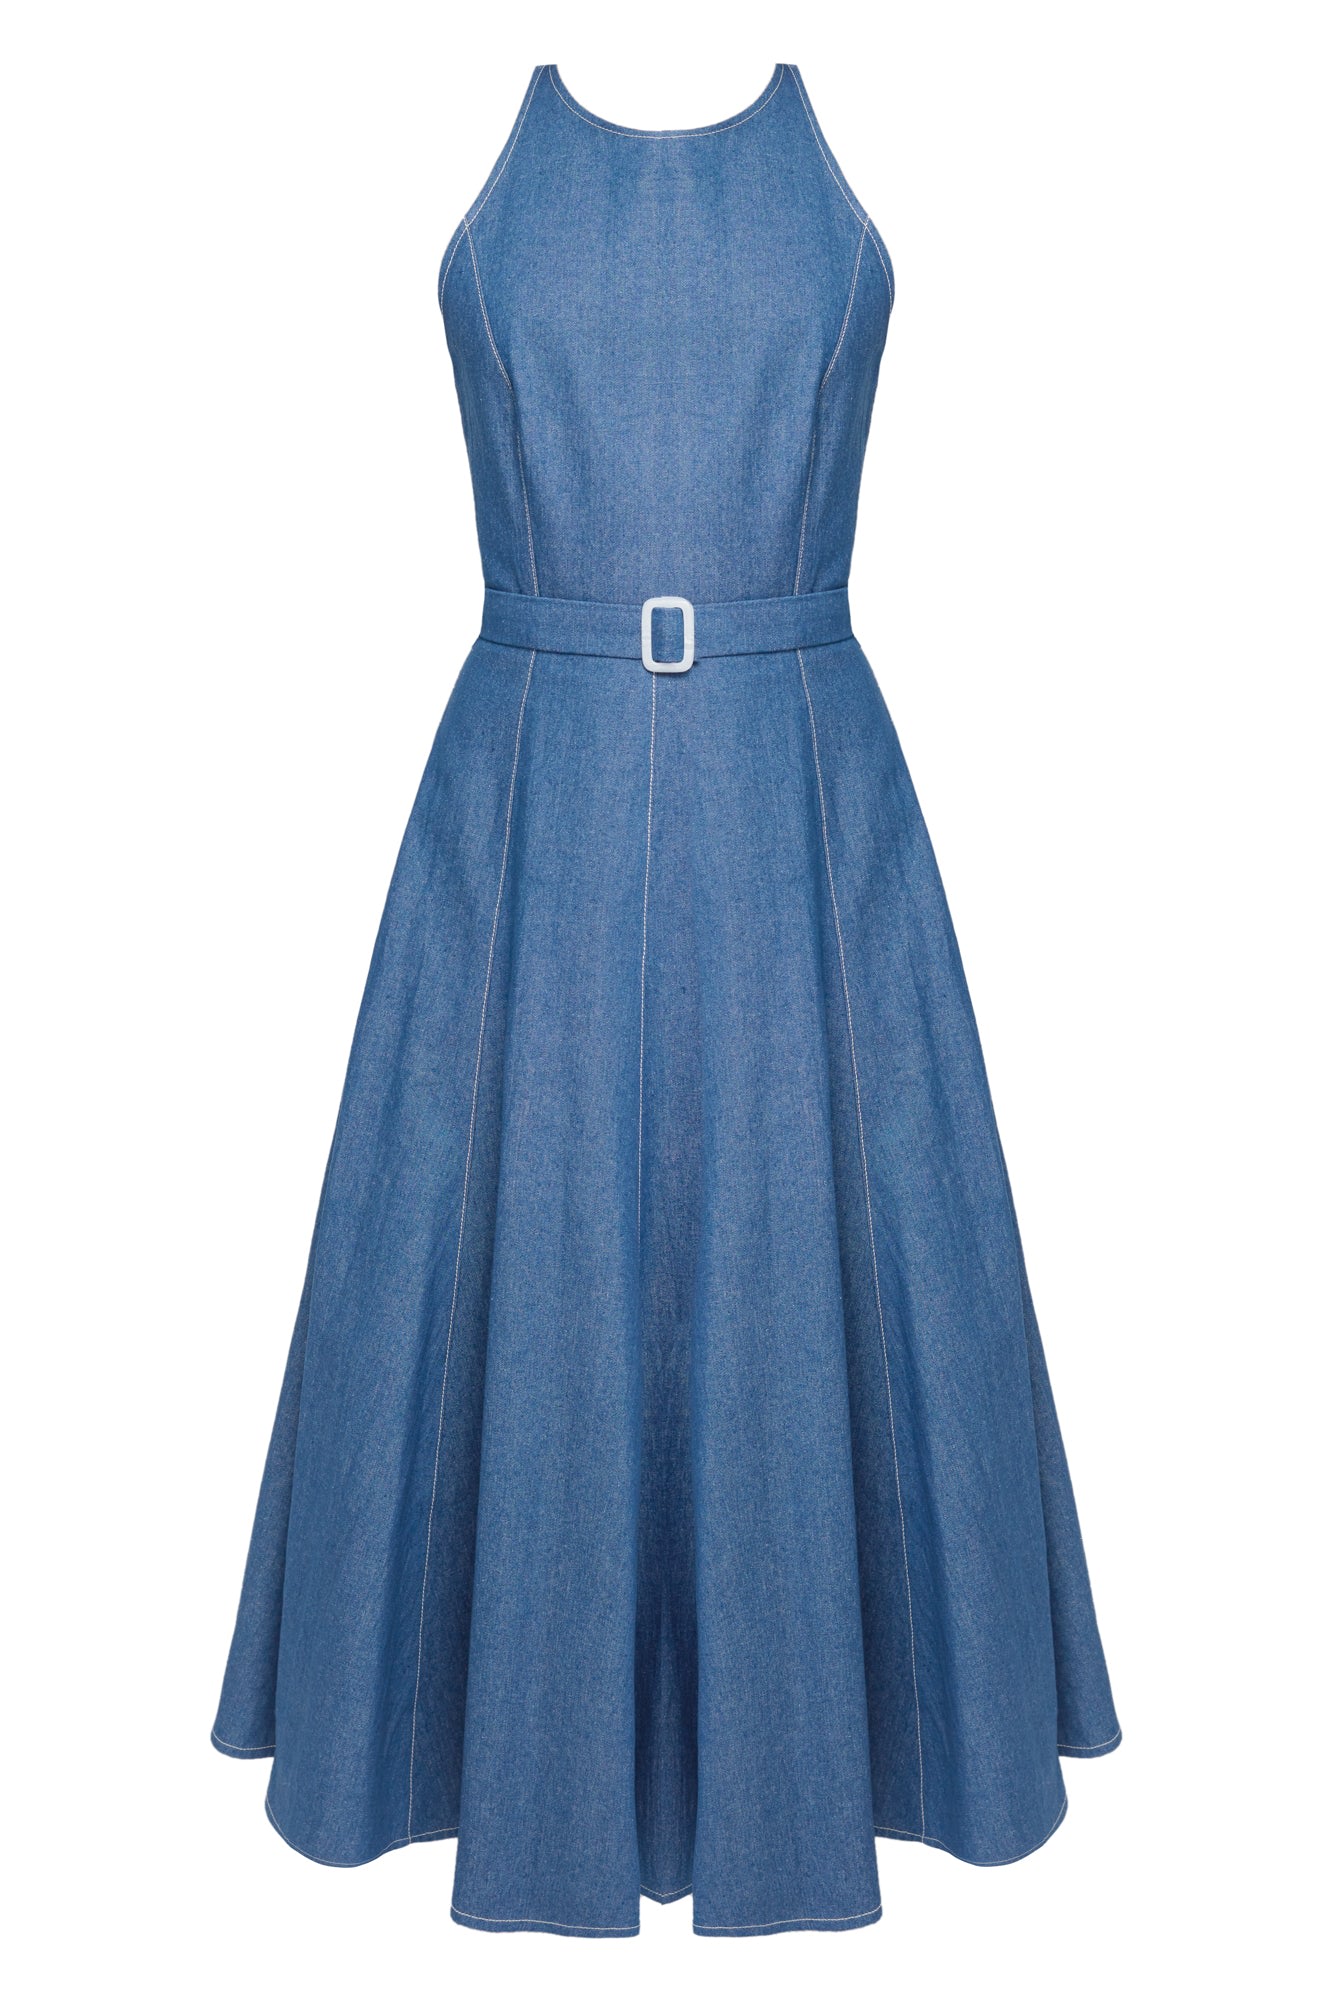 Undress Women's Ode Classy Blue Denim Midi Dress